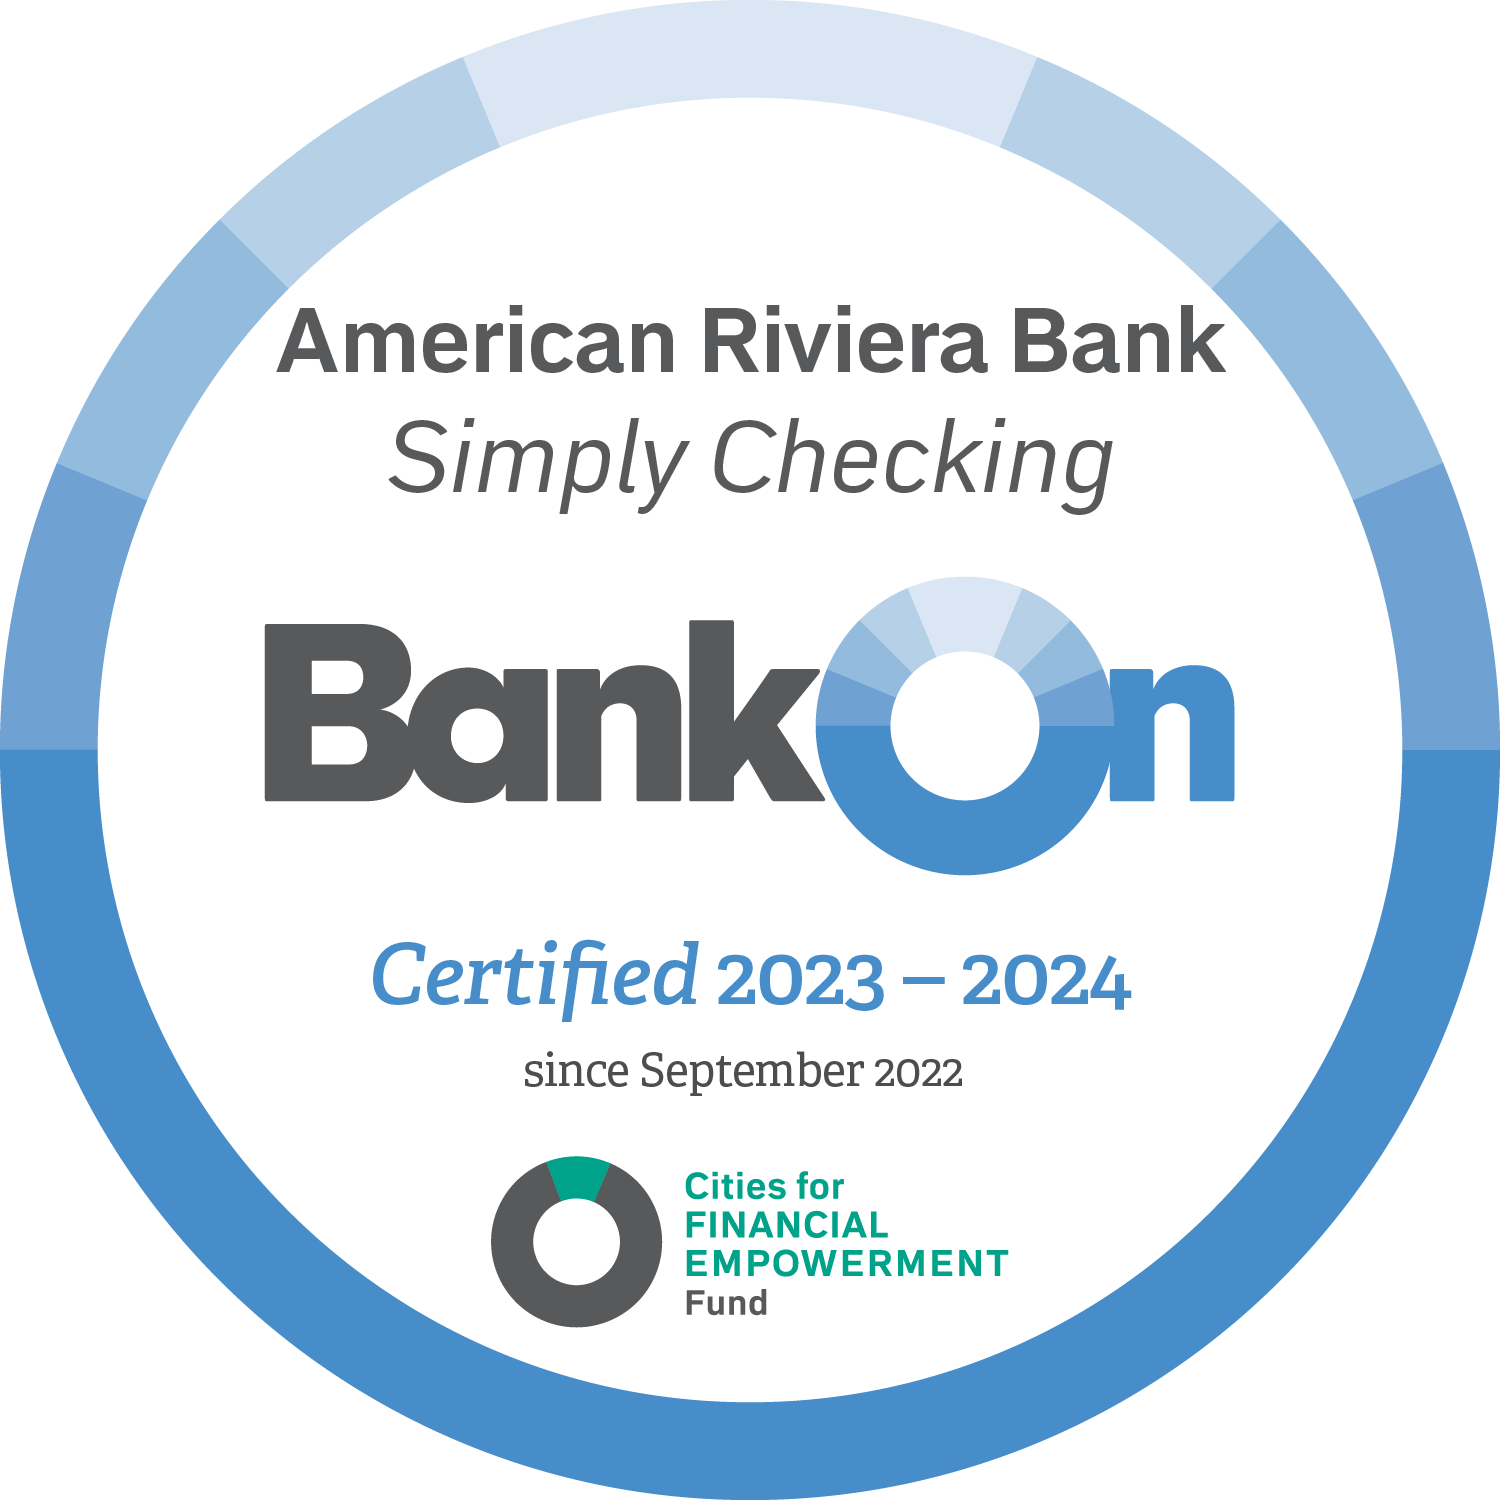 BankOn Certified